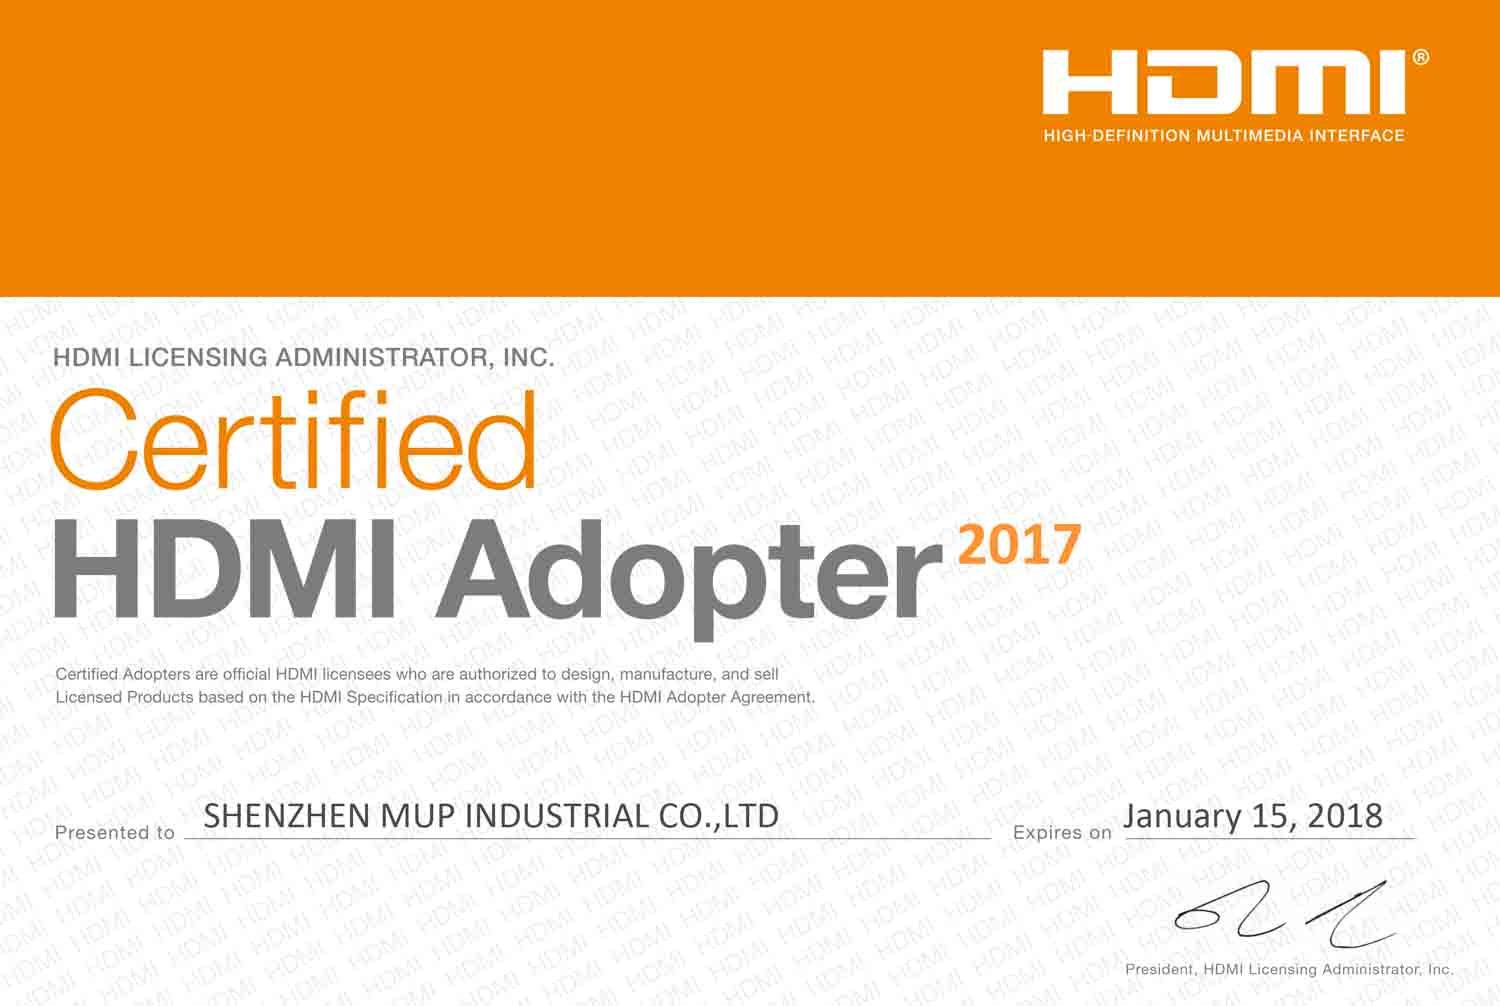 HDMI Material certified